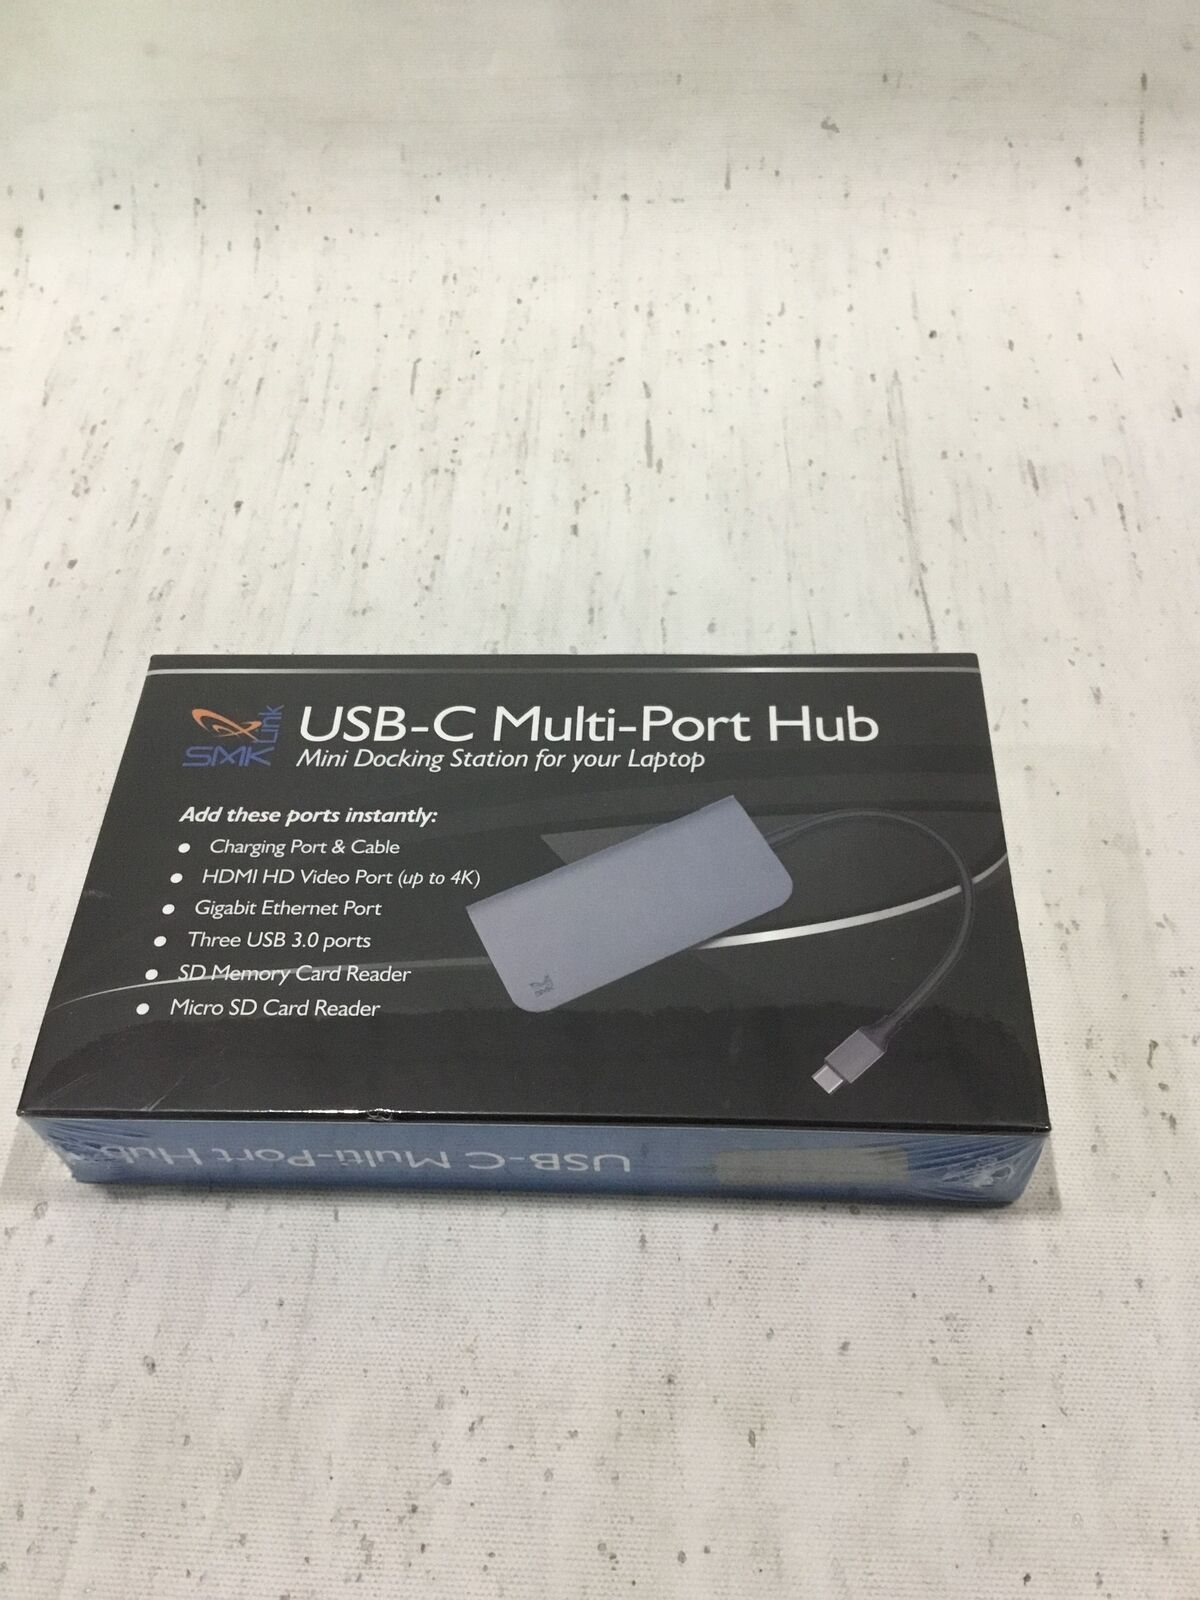 SMK Link USB-C Multi-Port Hub Mini Docking Station VP6920 - New / Sealed